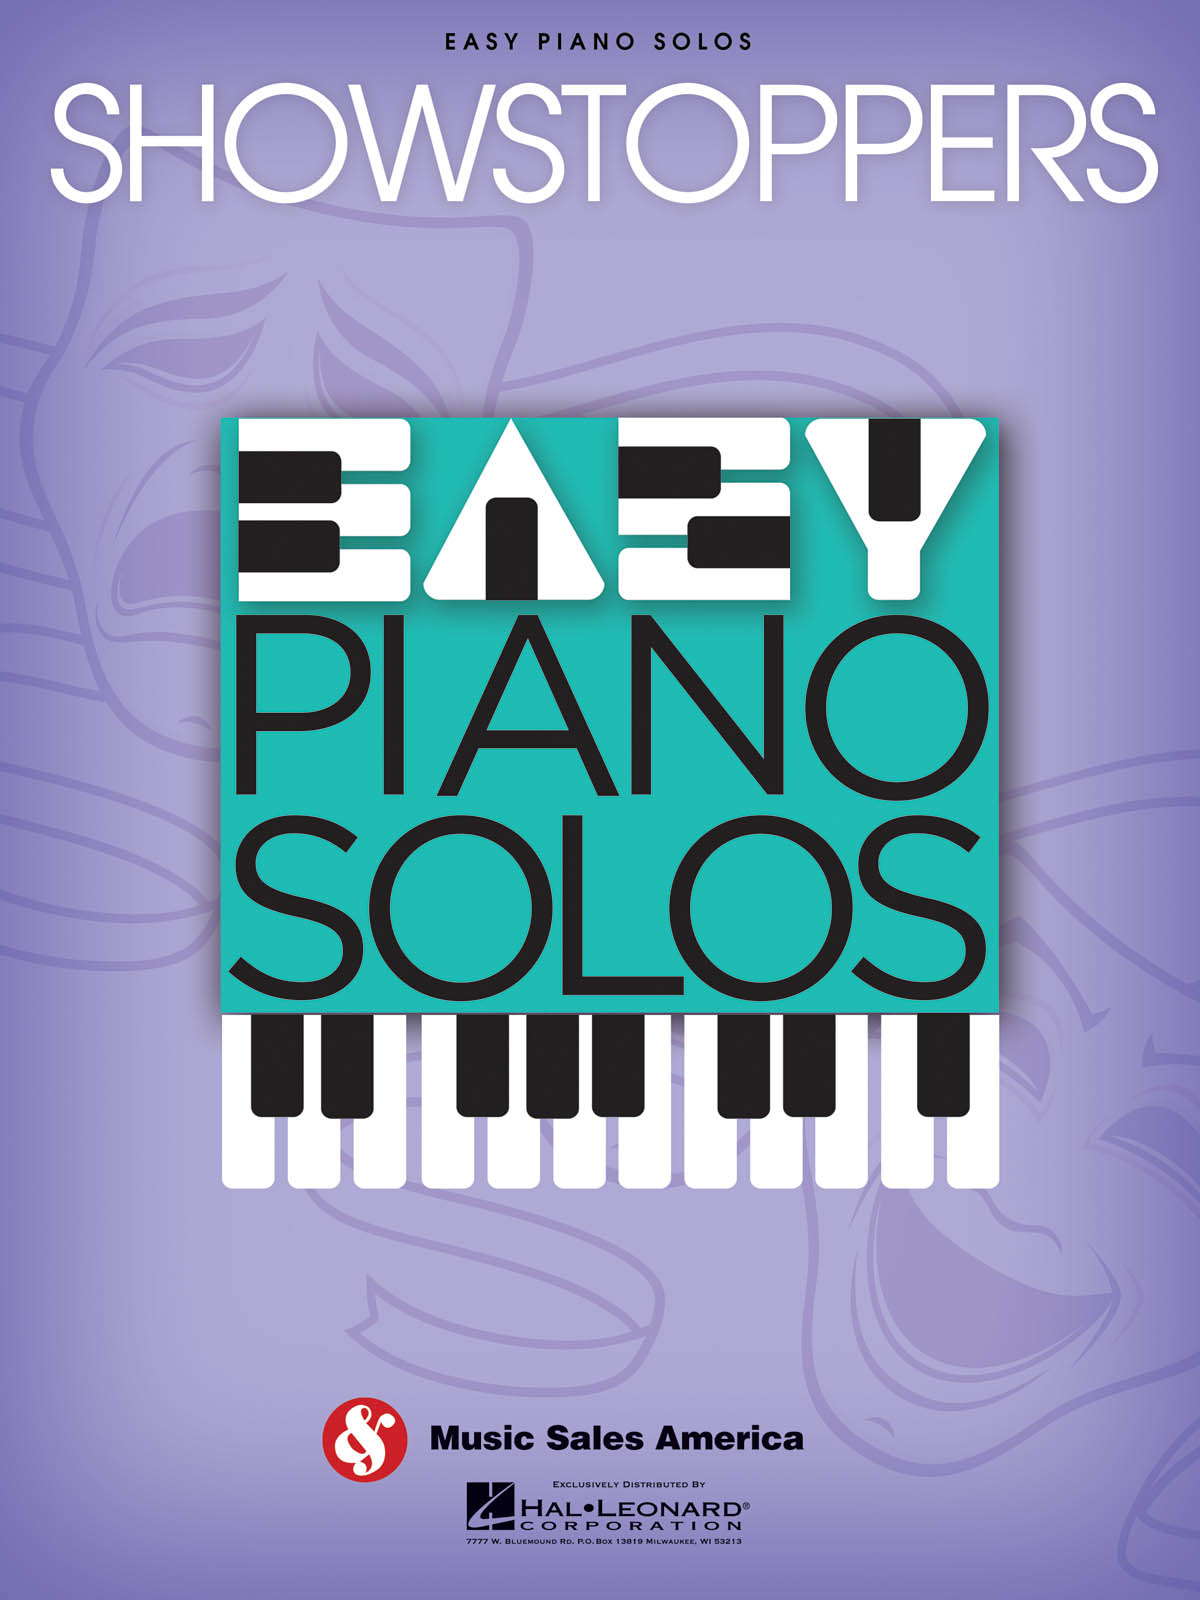 Easy Piano Solos: Showstoppers noty pro klavír děti